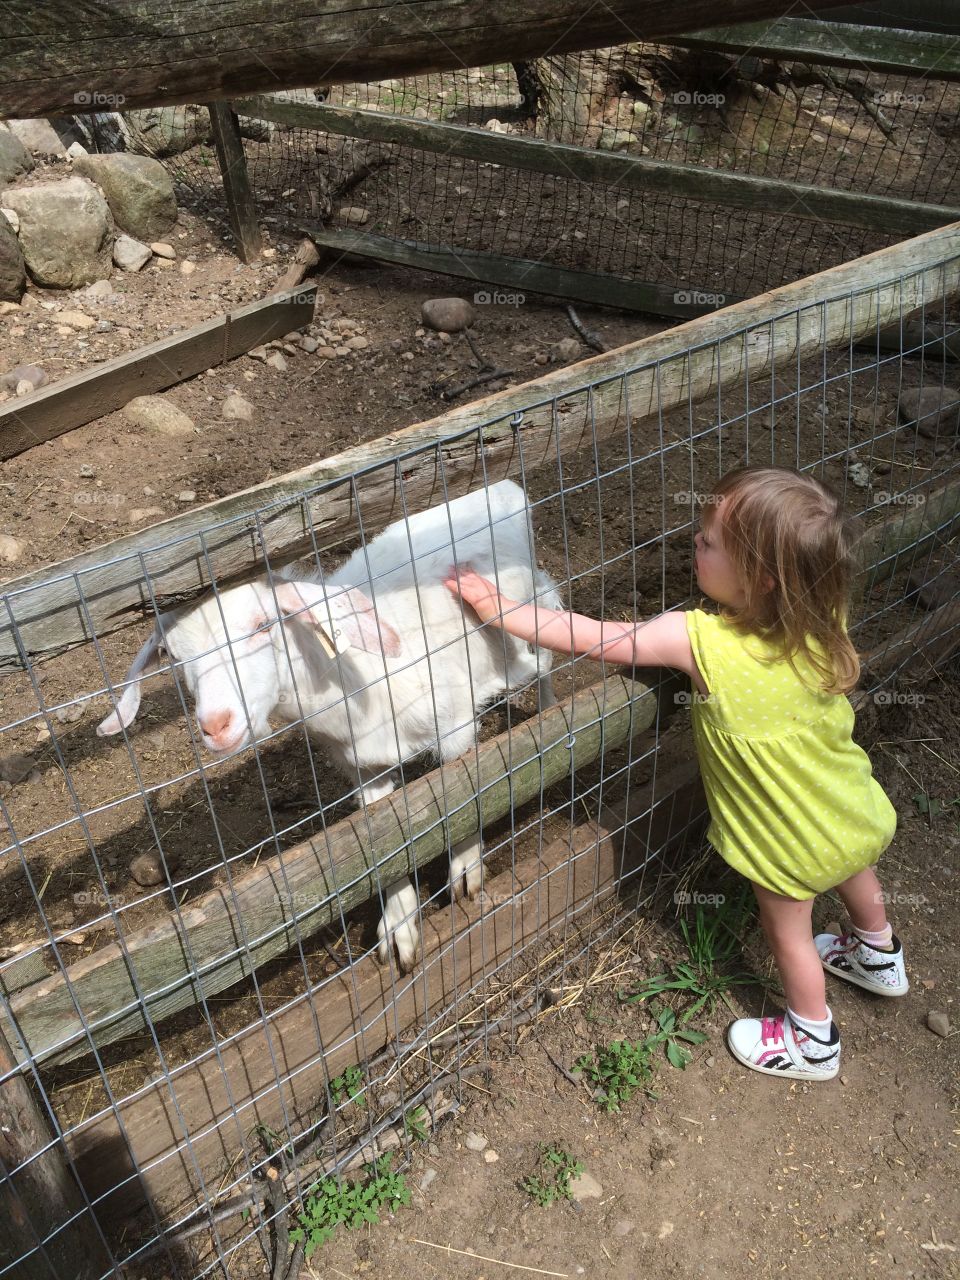 Goat, Down syndrome, farm